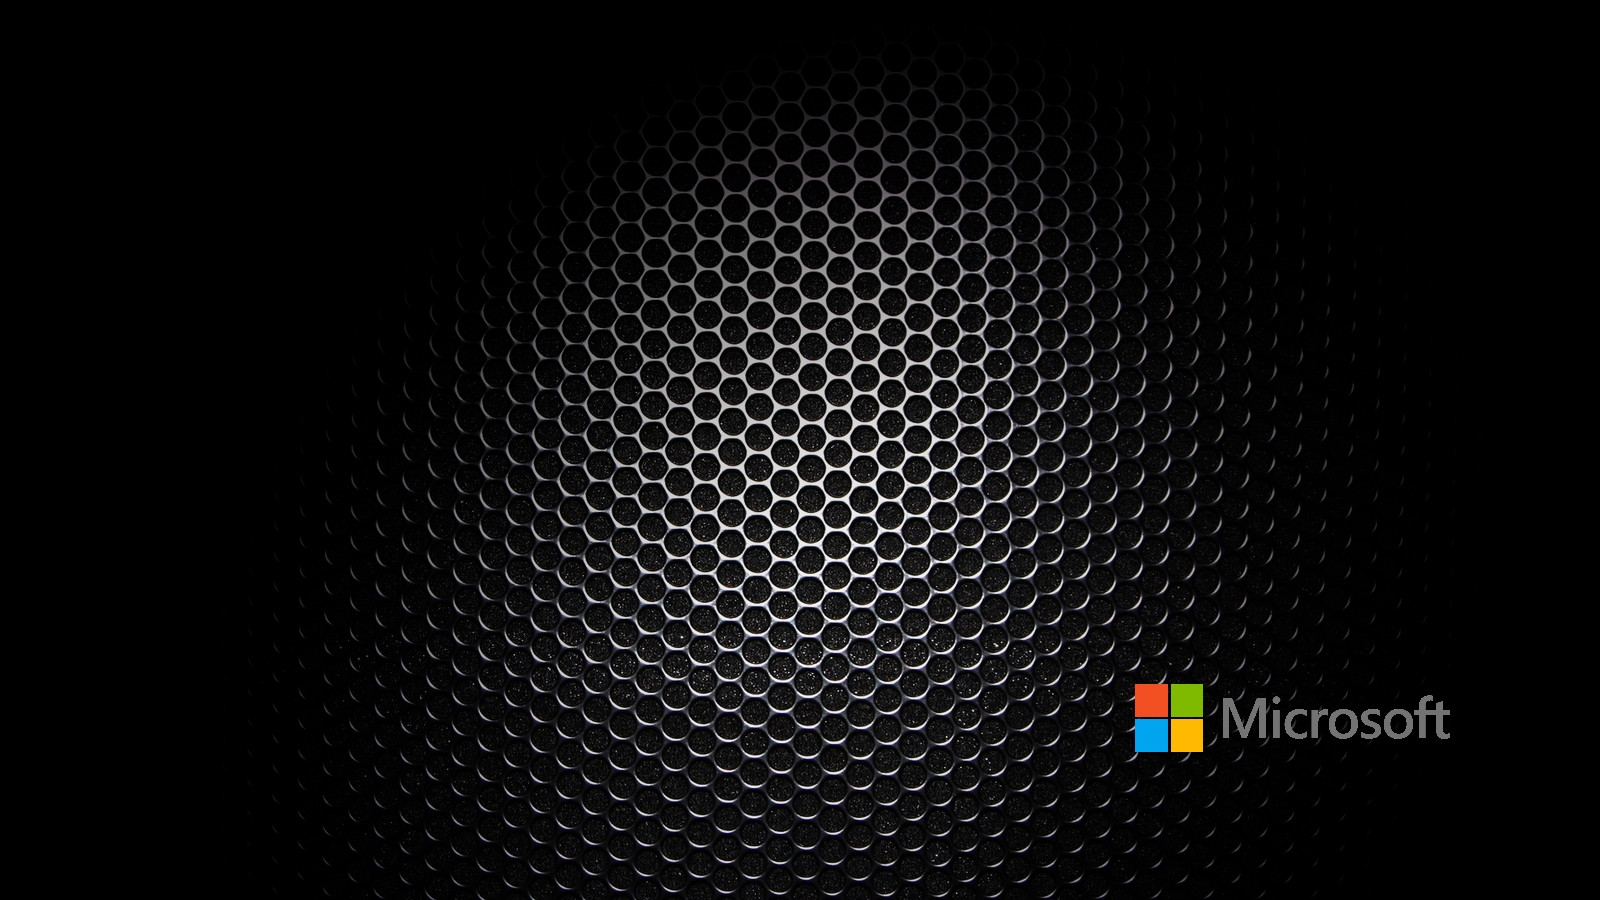 Microsoft Wallpaper Windows HD Pictures Best